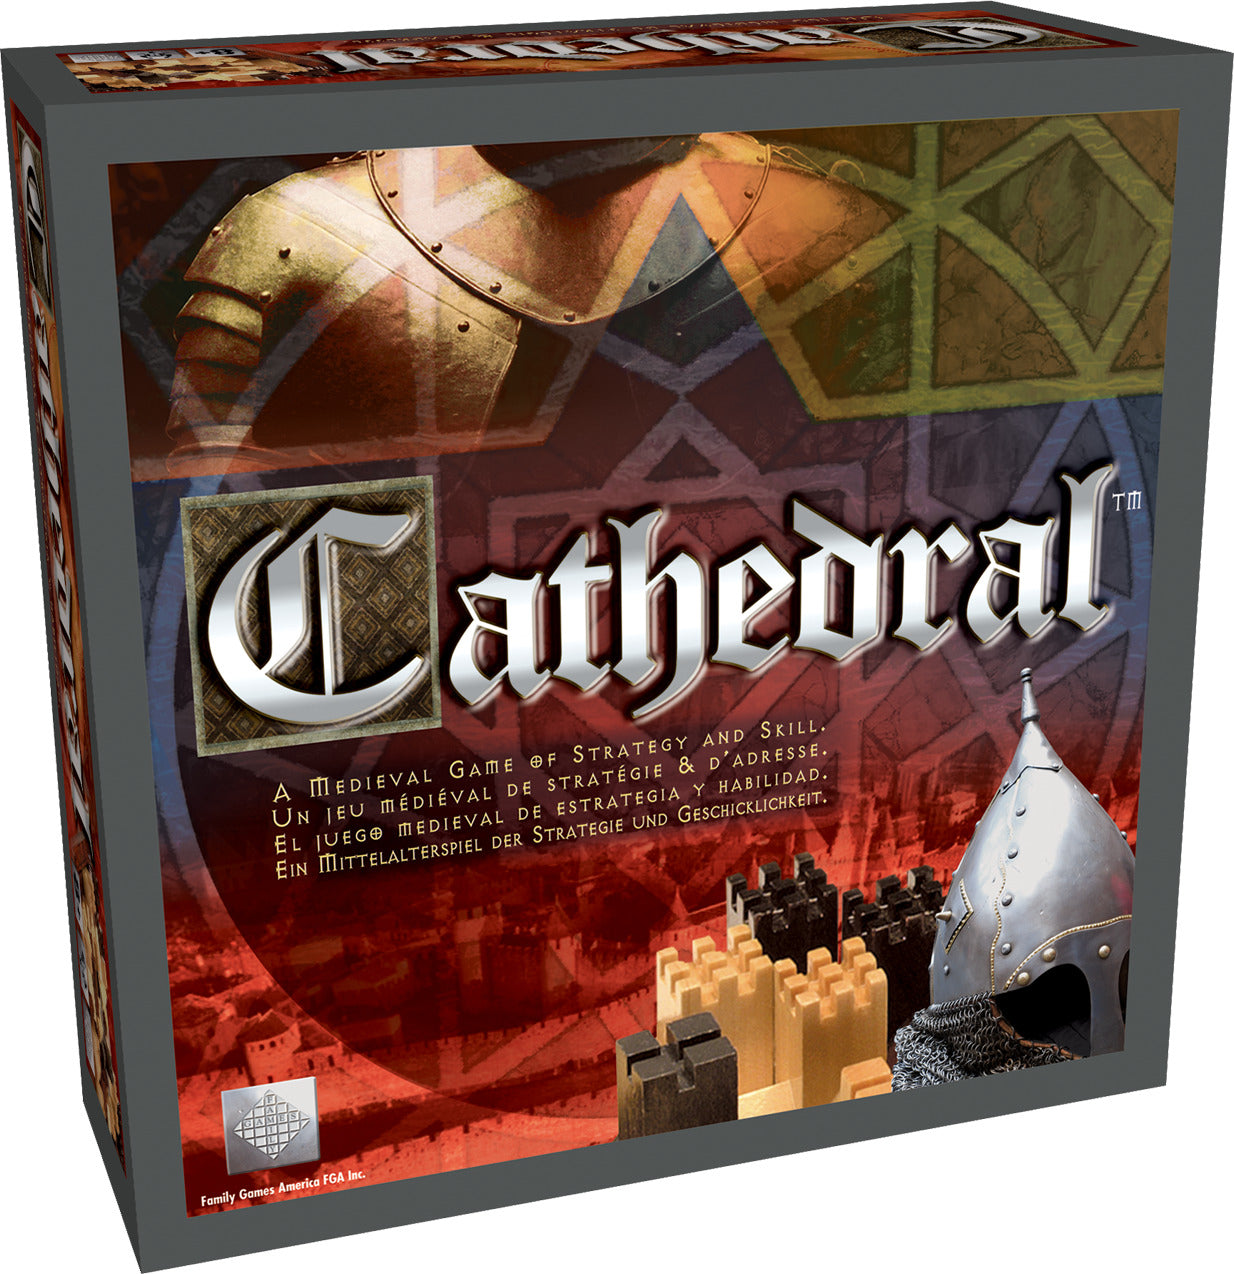 Cathedral - Original